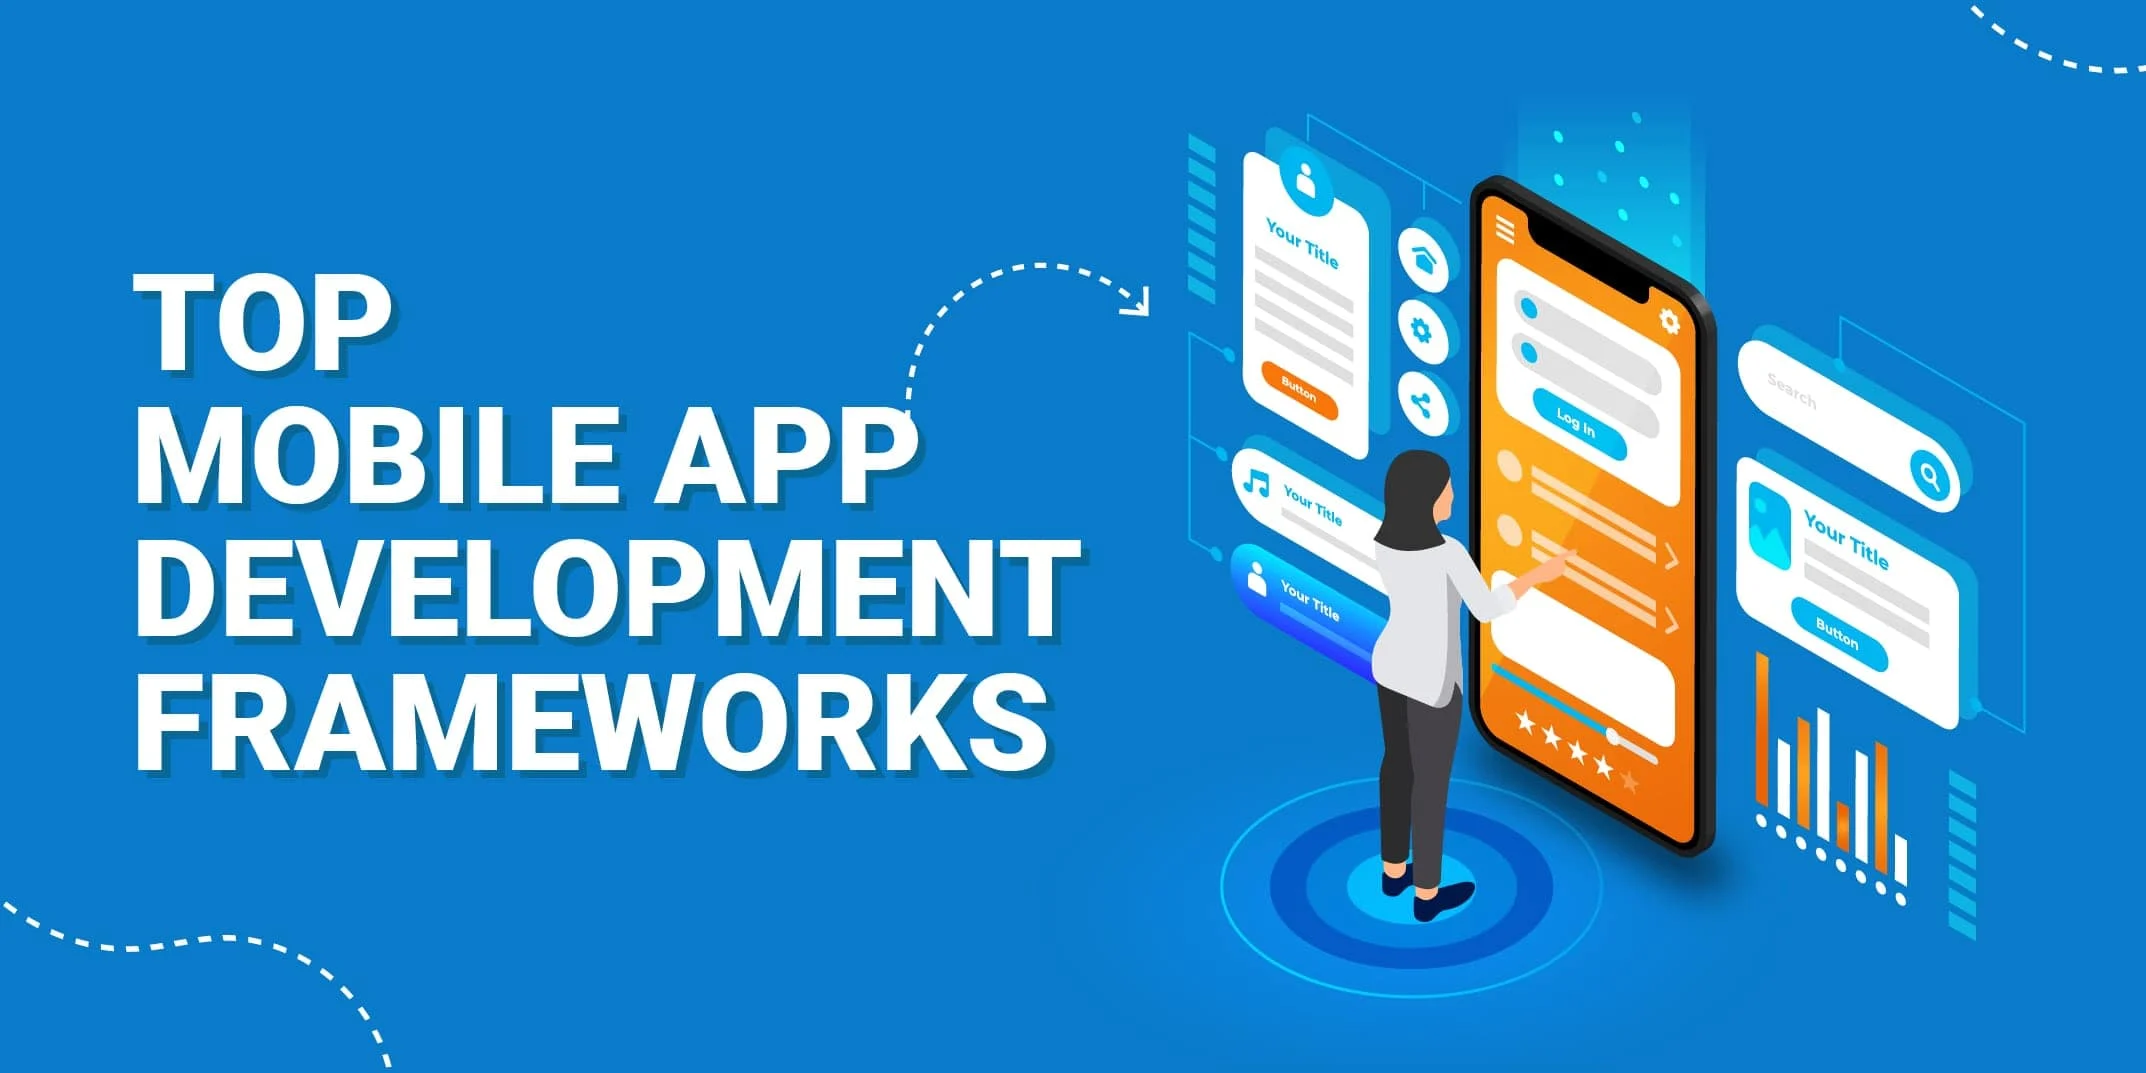 Development Tools and Frameworks